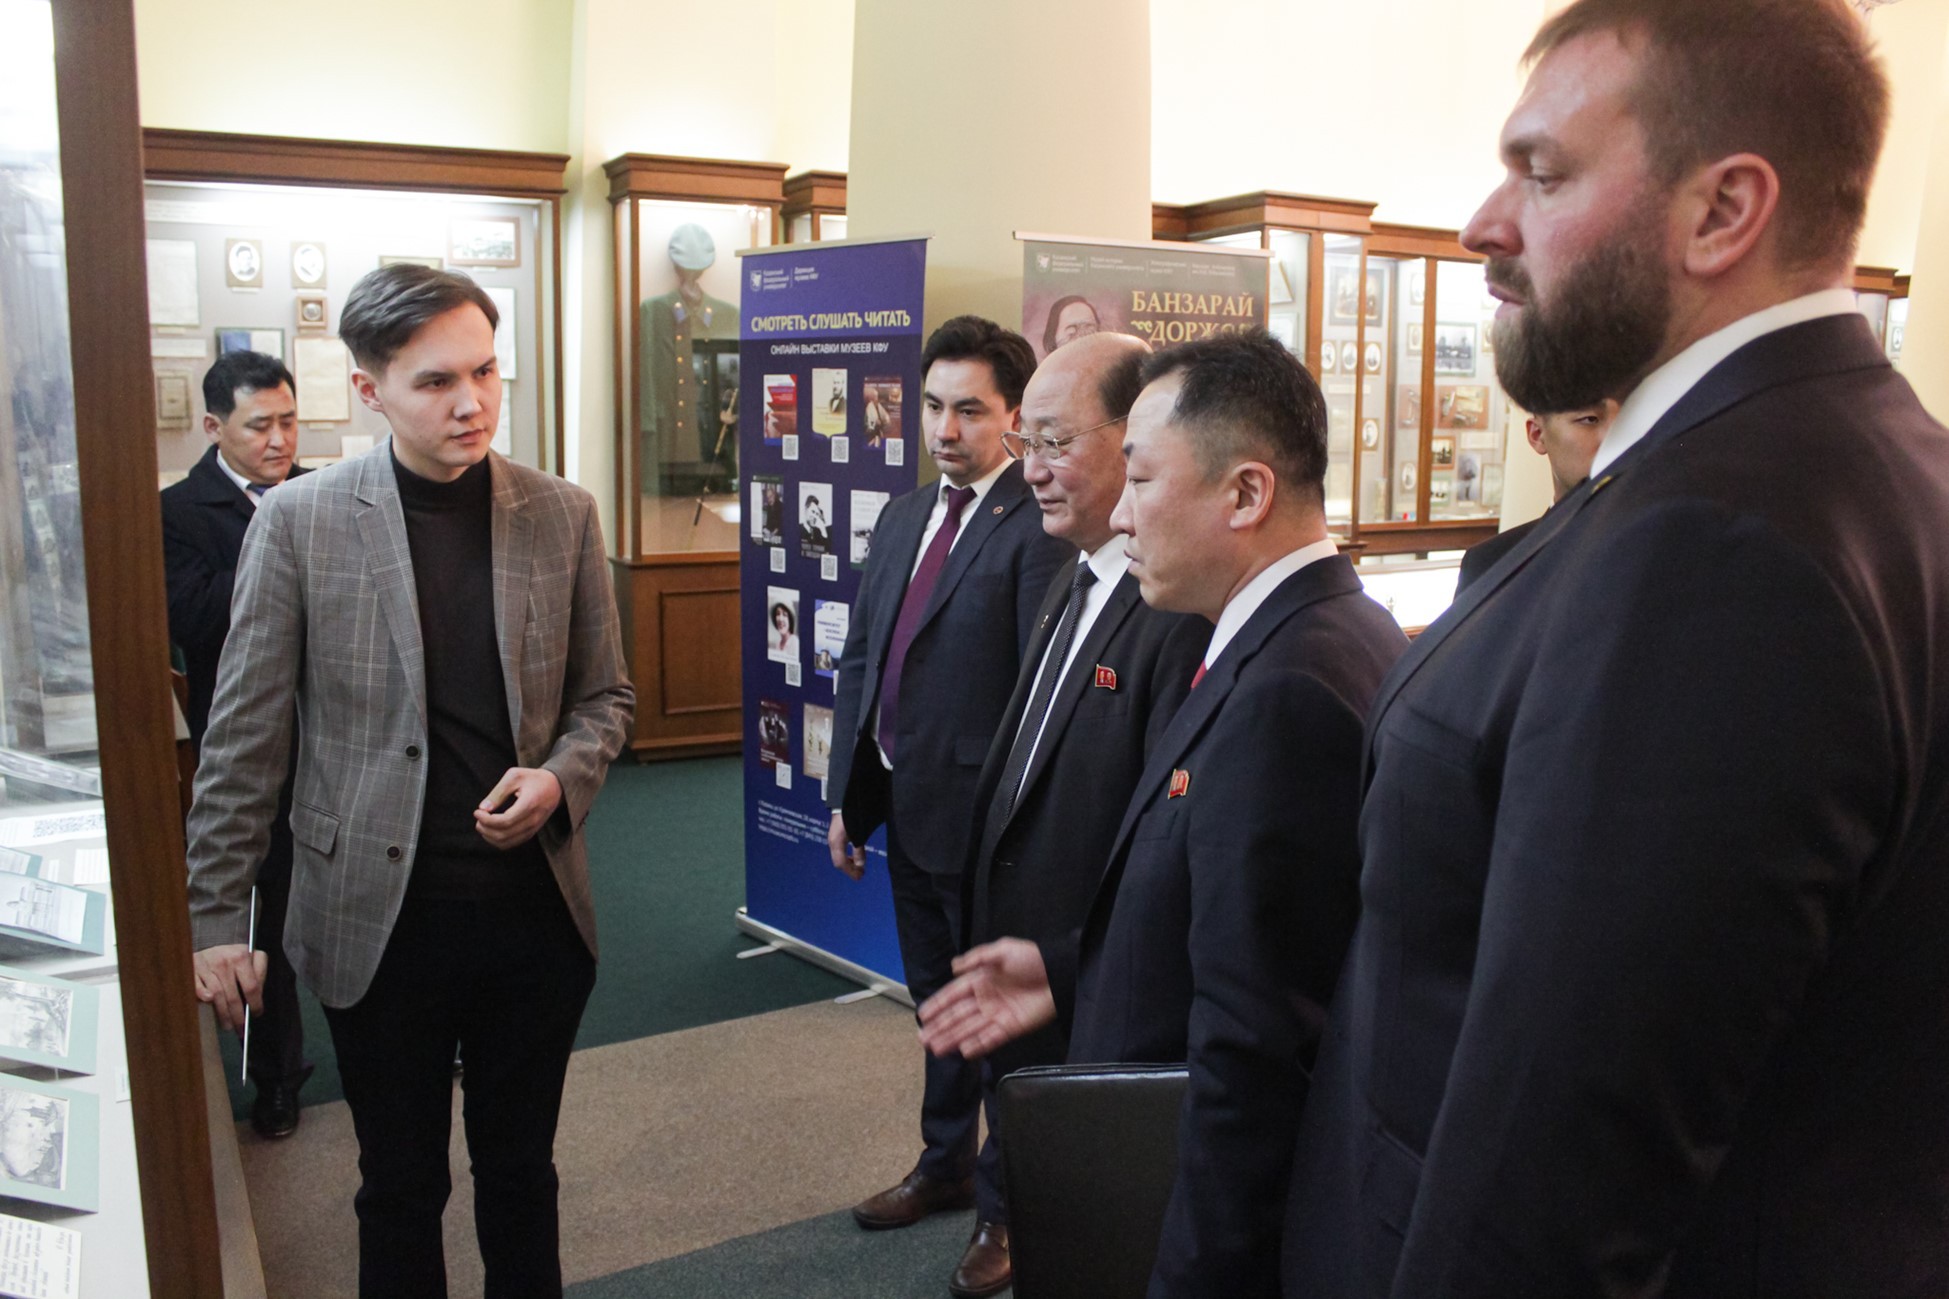 Посол КНДР в России посетил Казанский университет ,КНДР, Син Хон Чхол, Музей истории